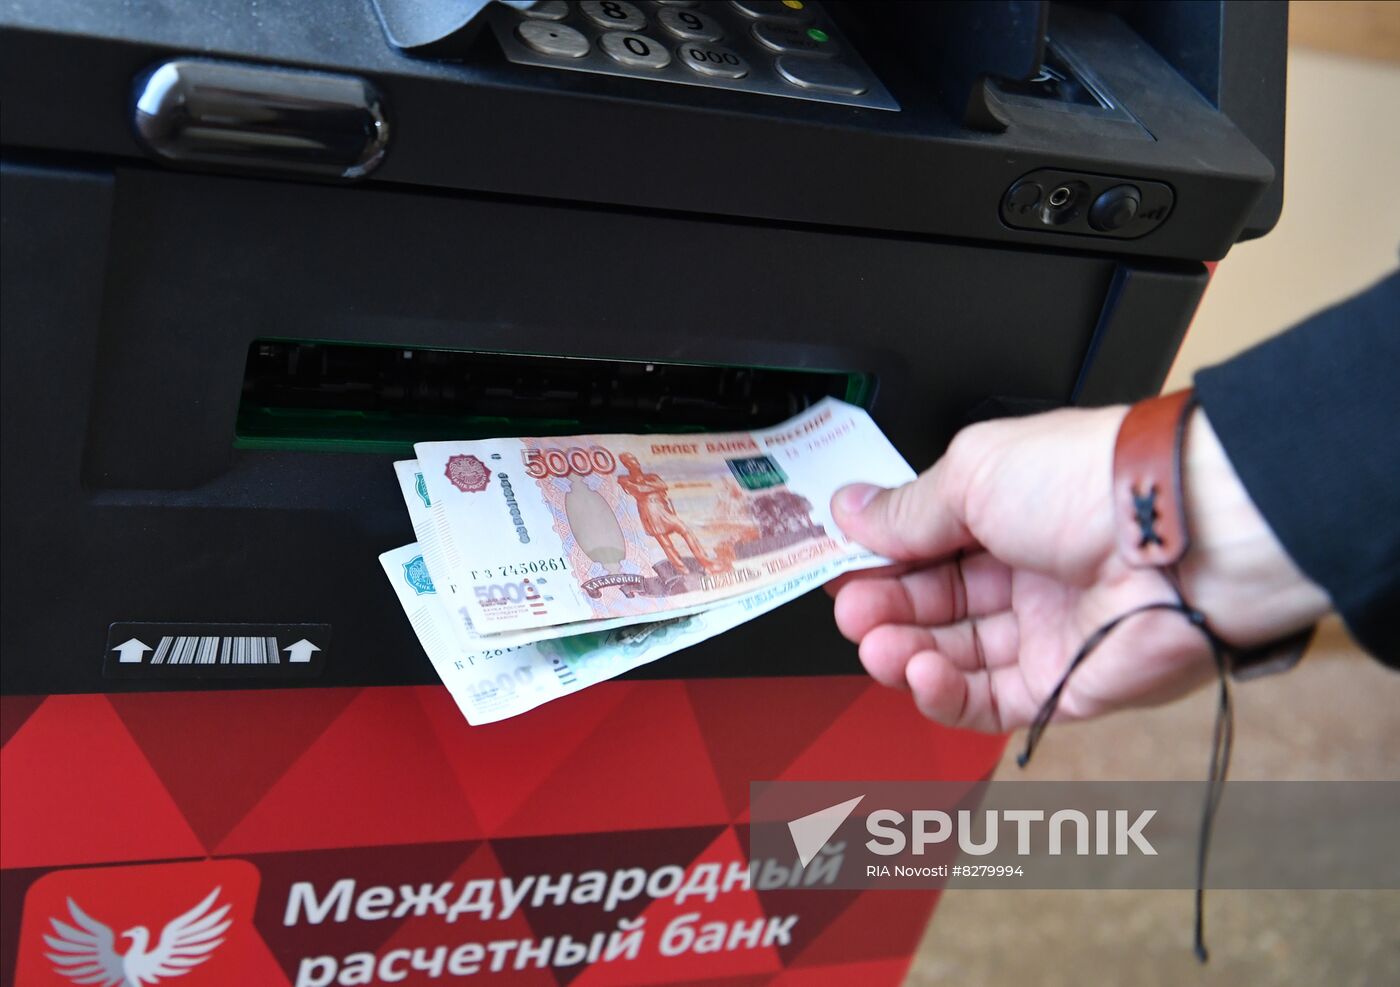 Ukraine Russia Military Operation ATM